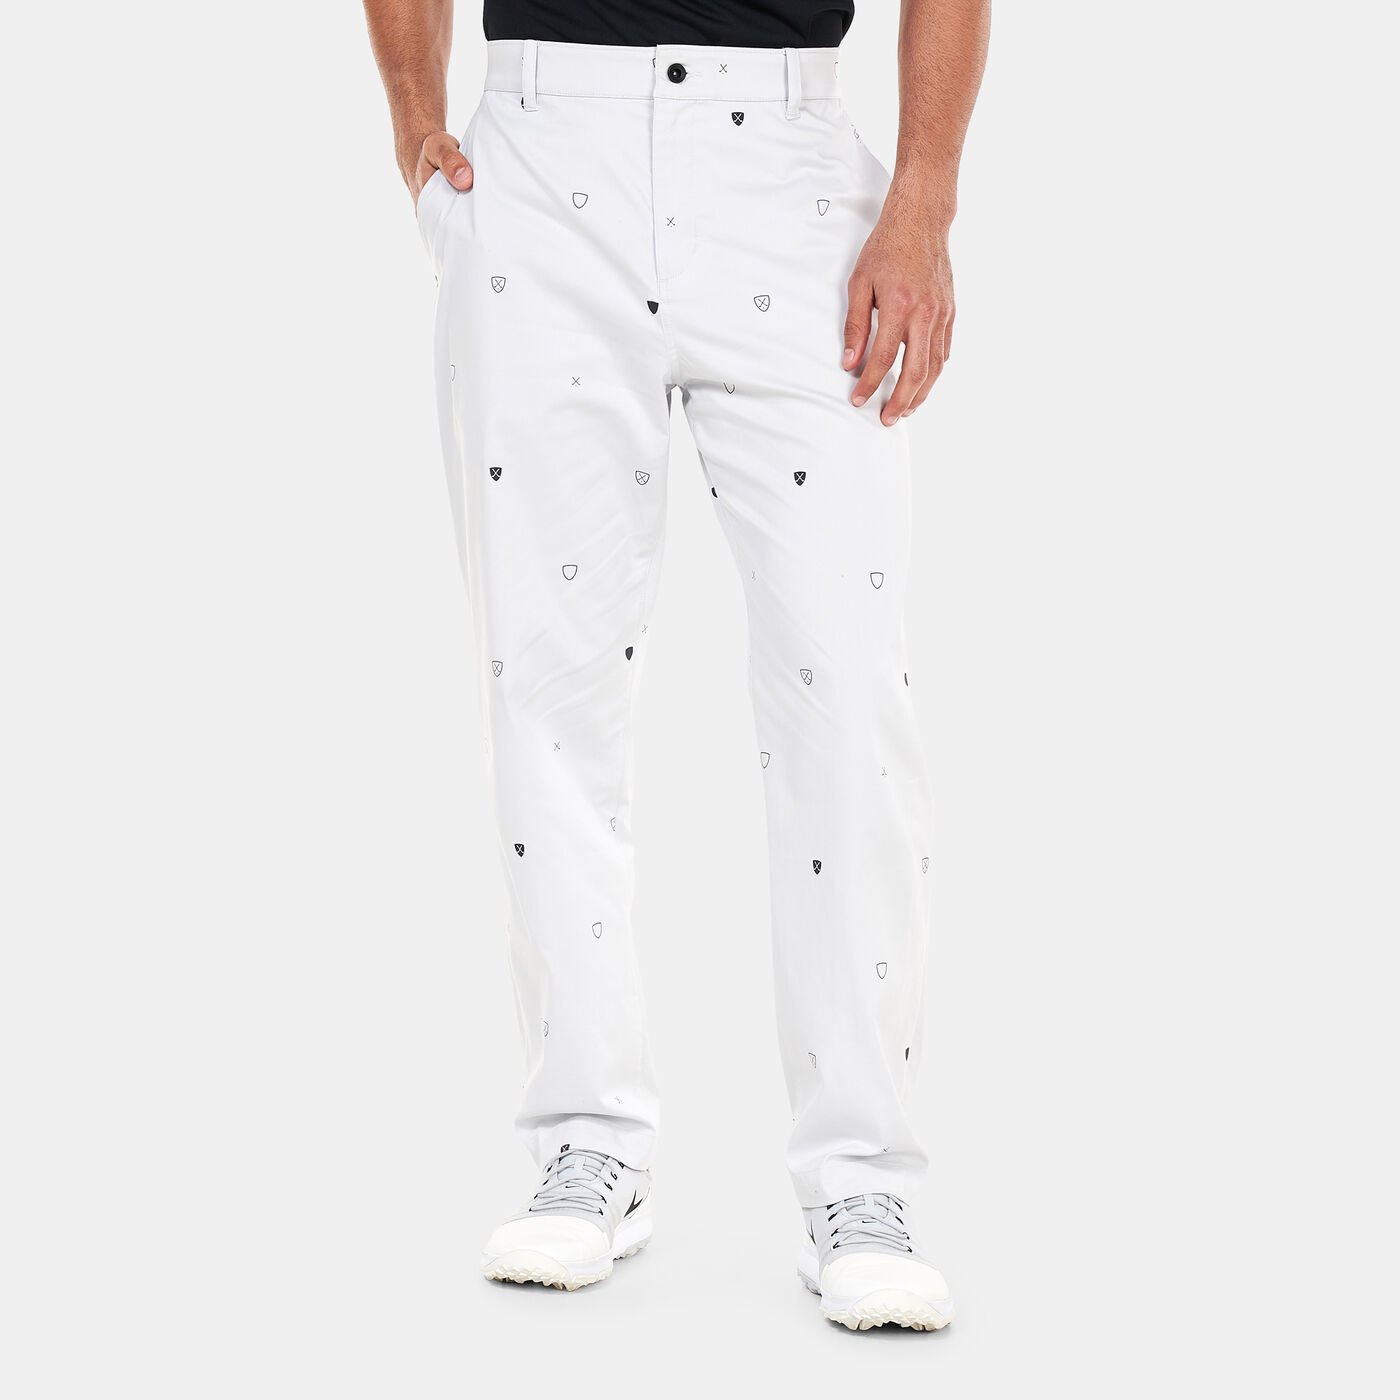 Men's Dri-FIT UV Chino Printed Pants